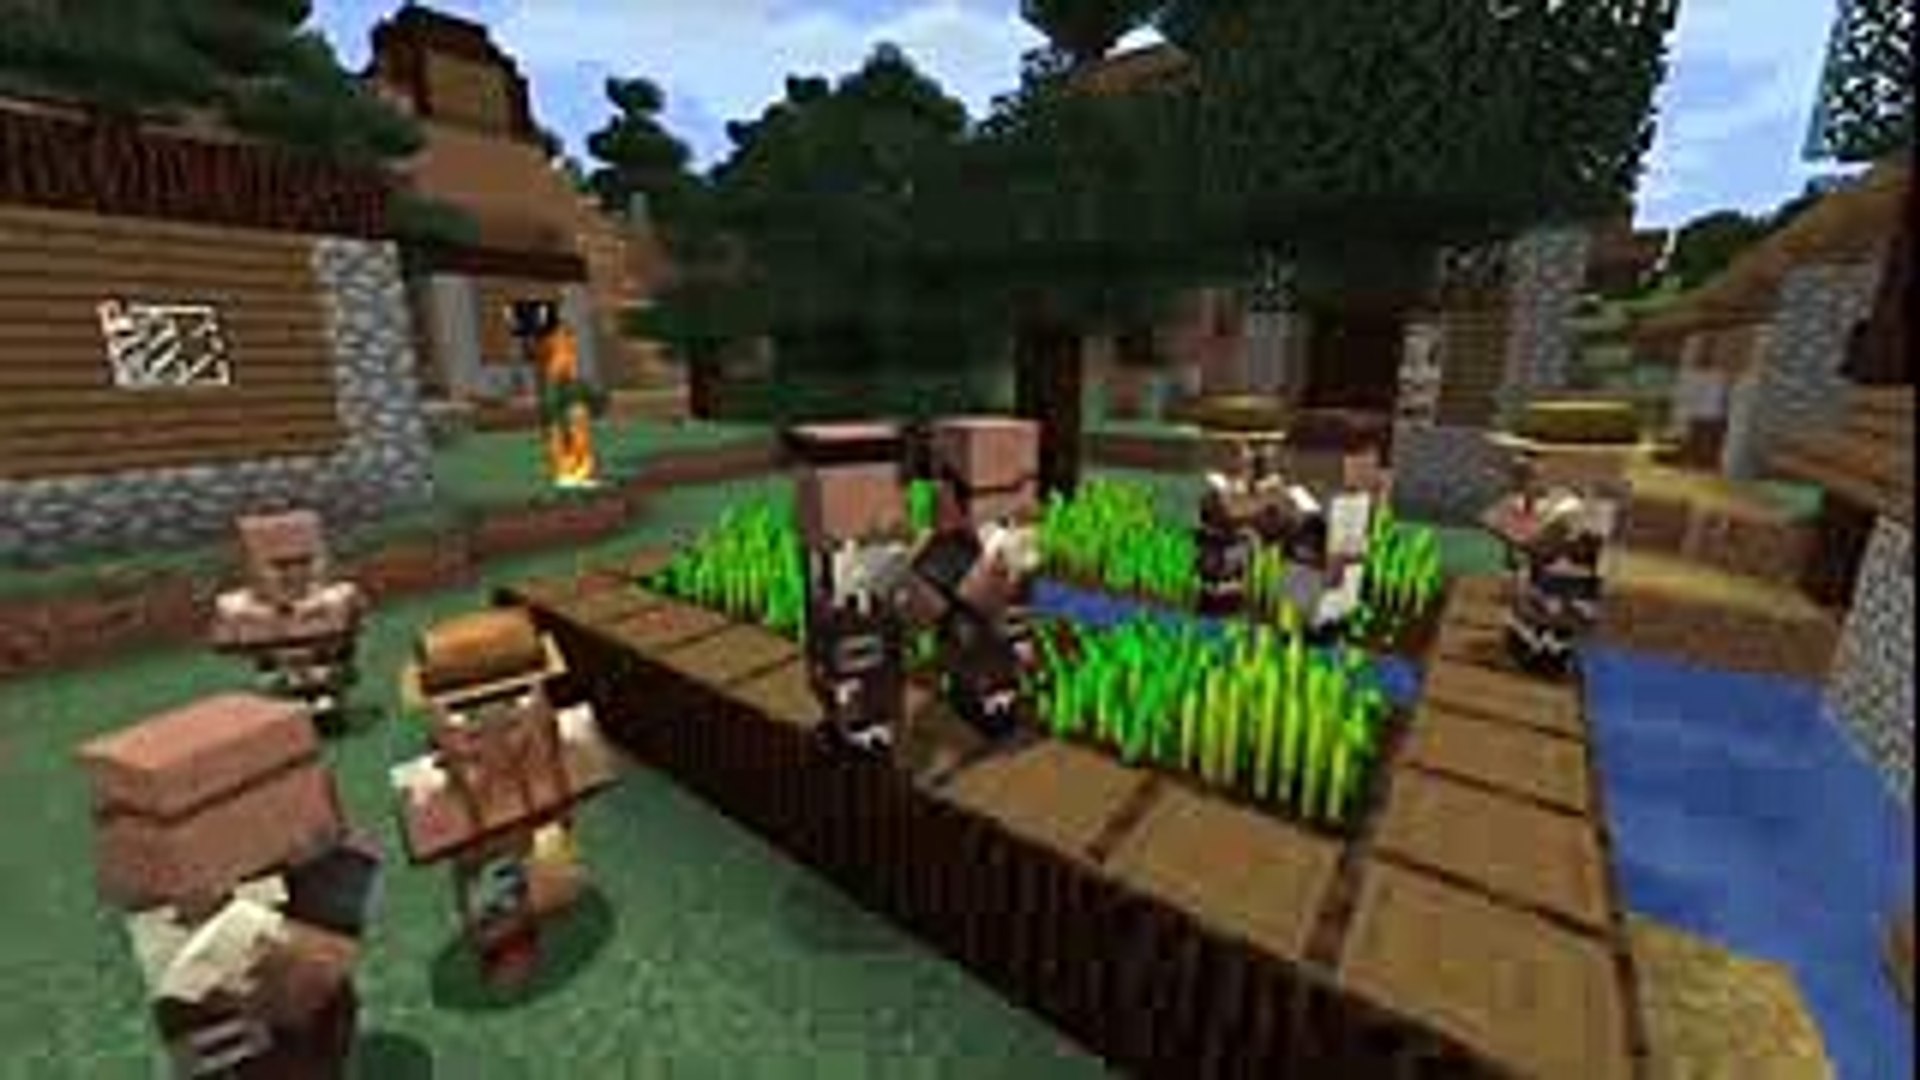 Minecraft Village Pillage Update 1 14 Trailer Free To Use Video Dailymotion